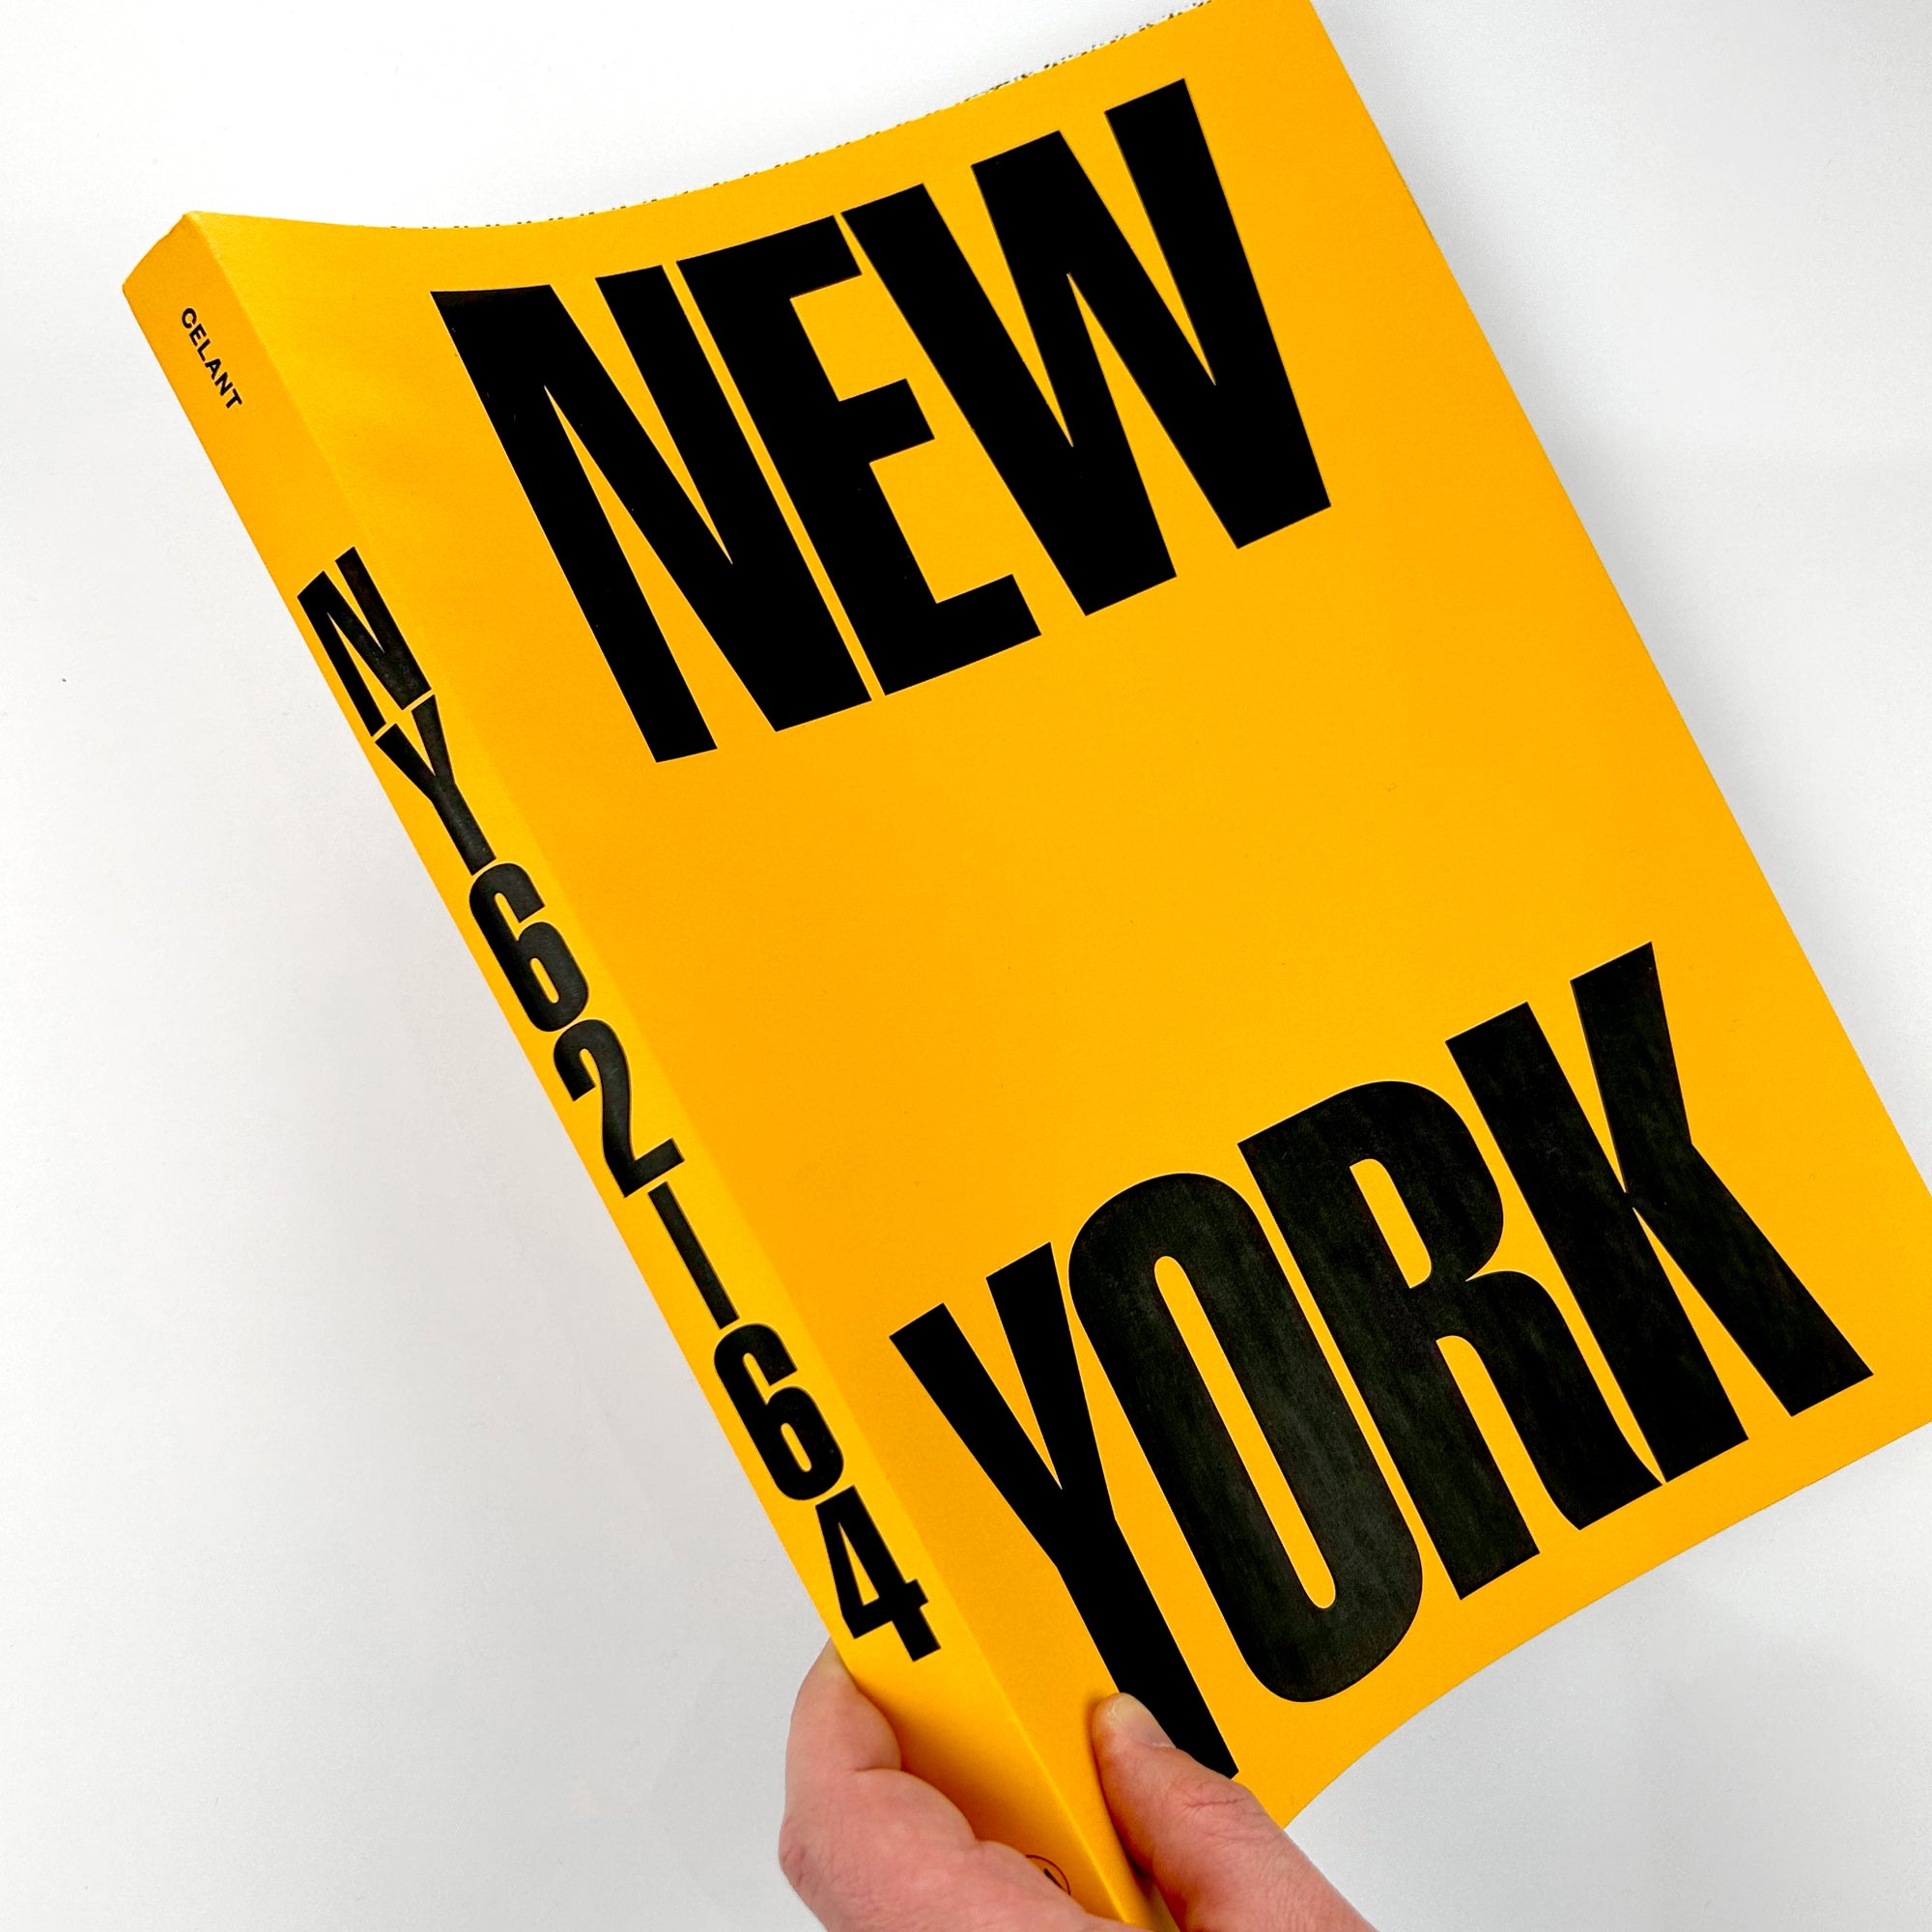 New York: 1962–1964